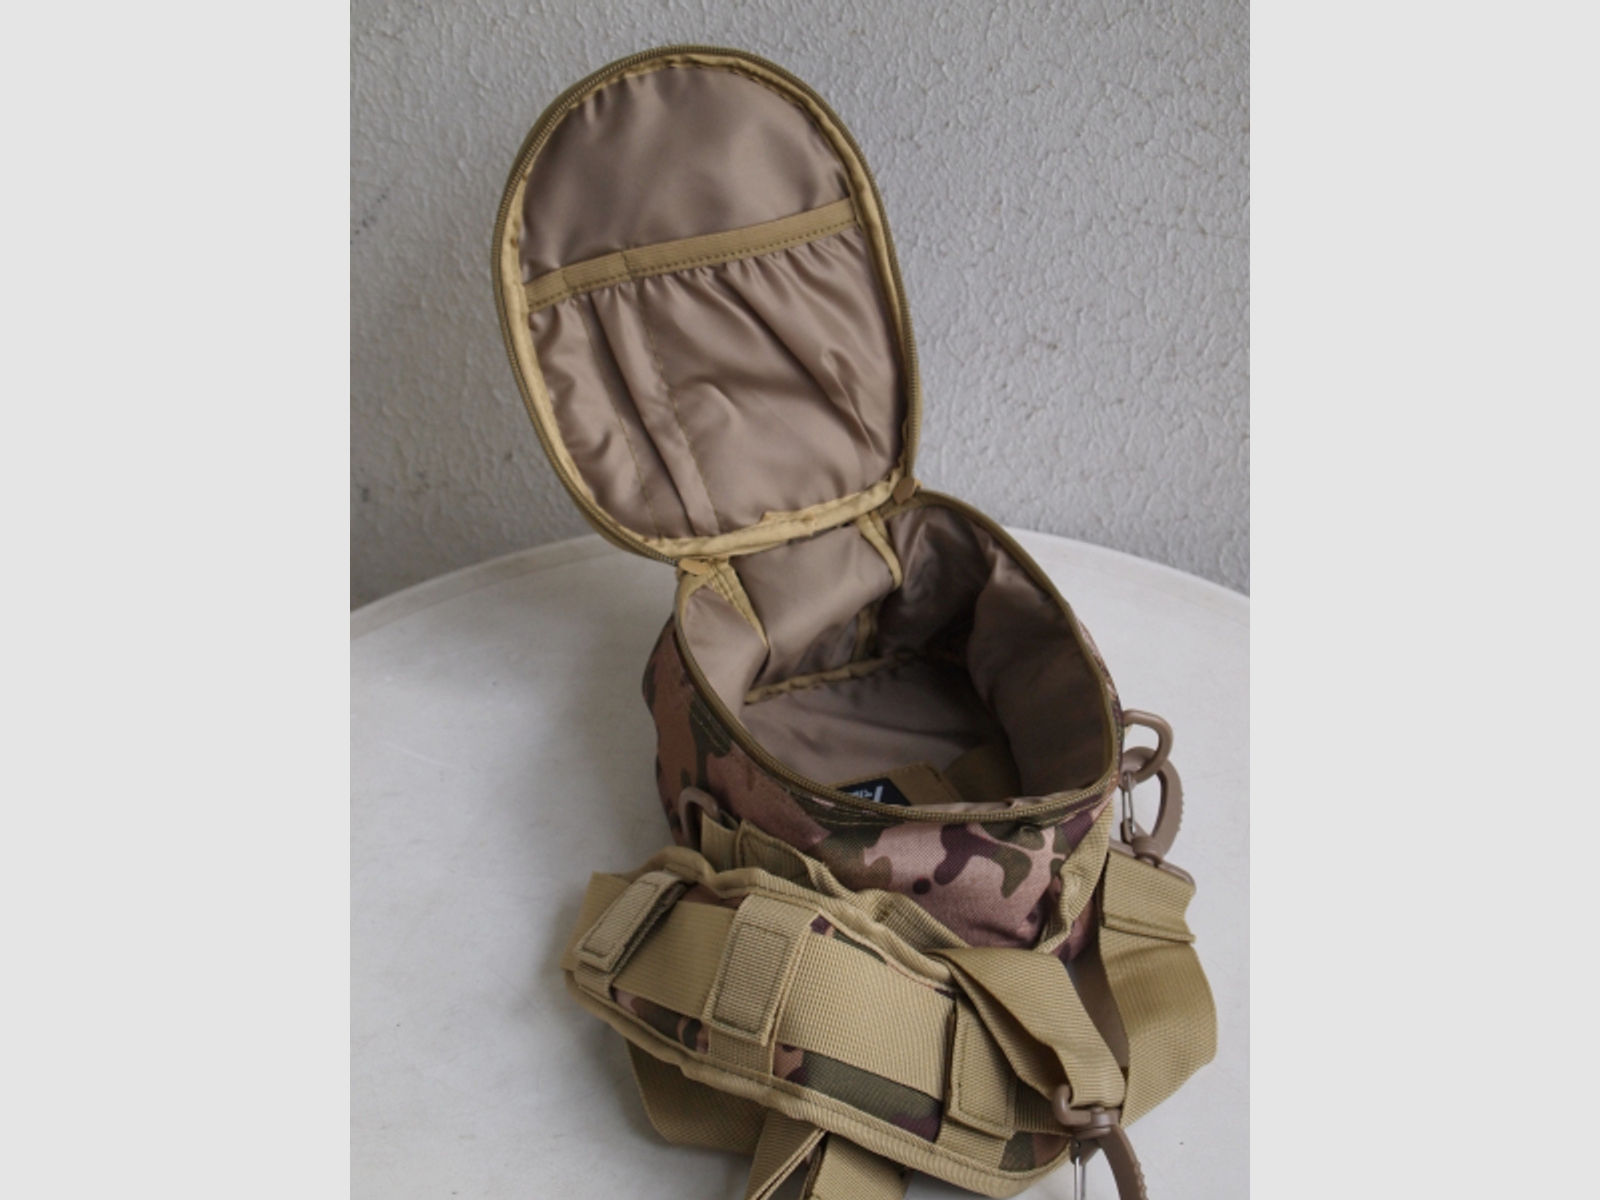 Militär Fernglas Tasche für 8x30 Ferngläser, Fernglas oder Gehörschutz, camo, tactical bag